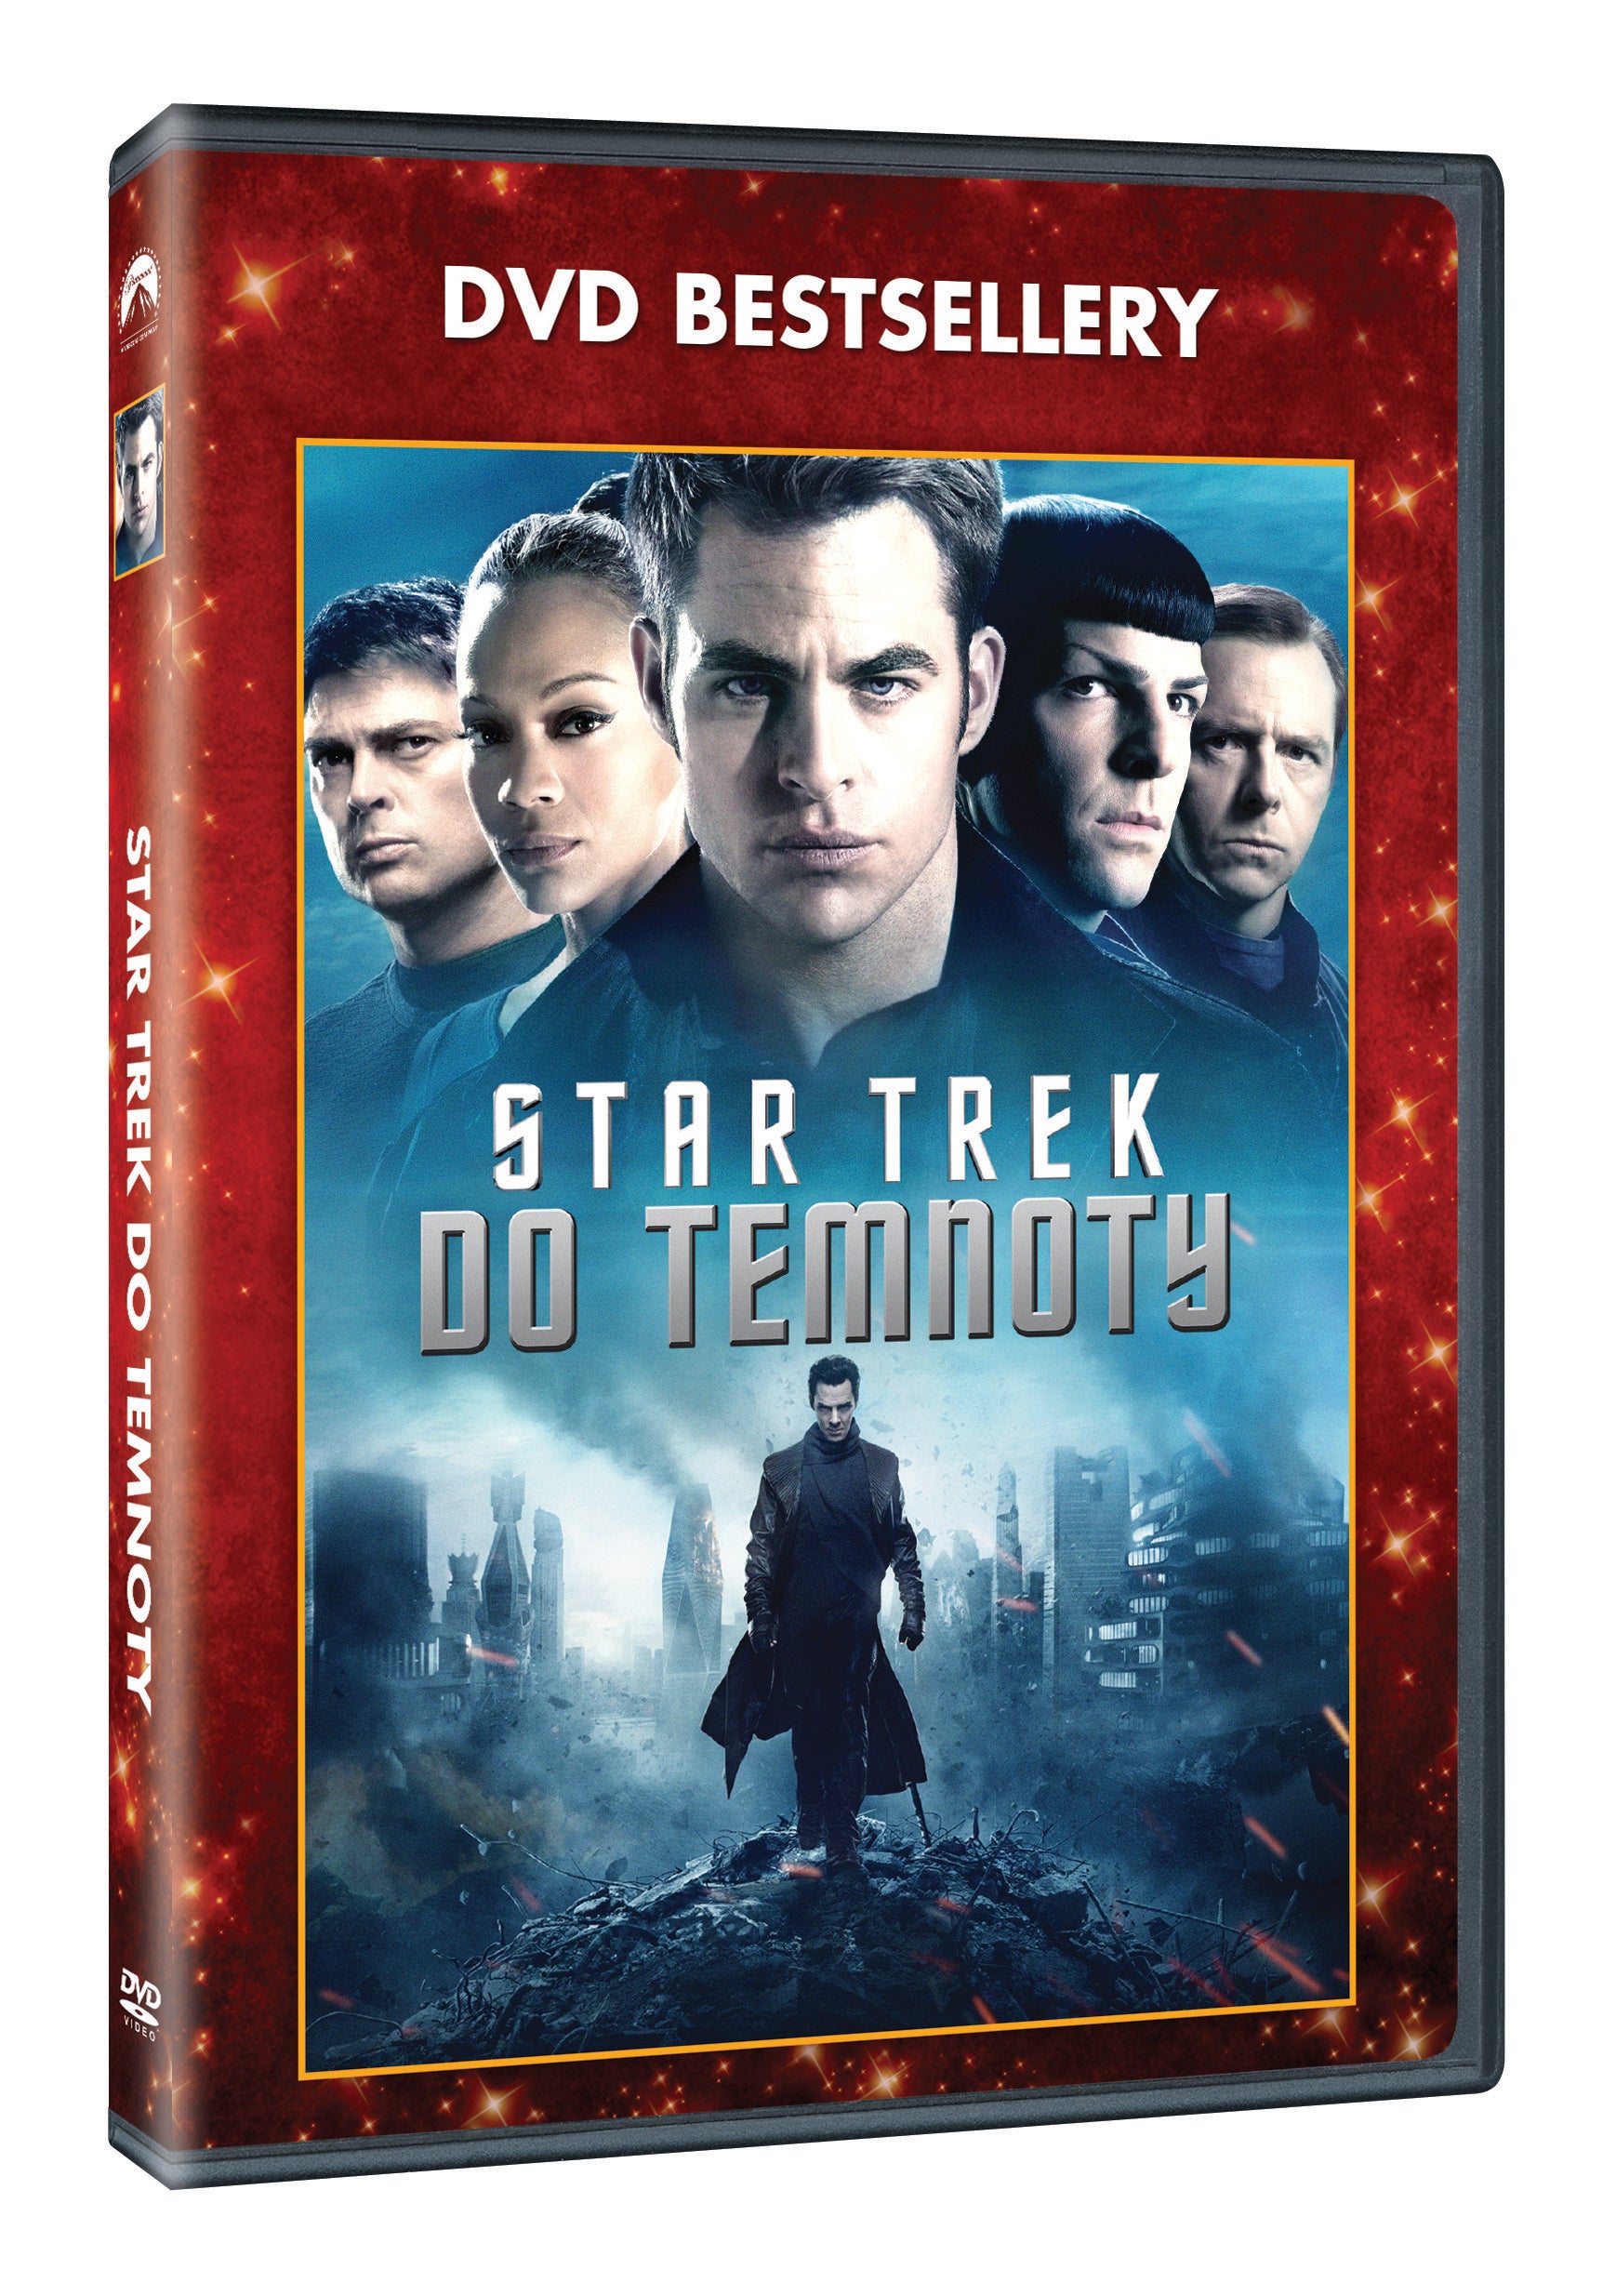 Star Trek: Do temnoty - DVD bestsellery (Star Trek into Darkness)